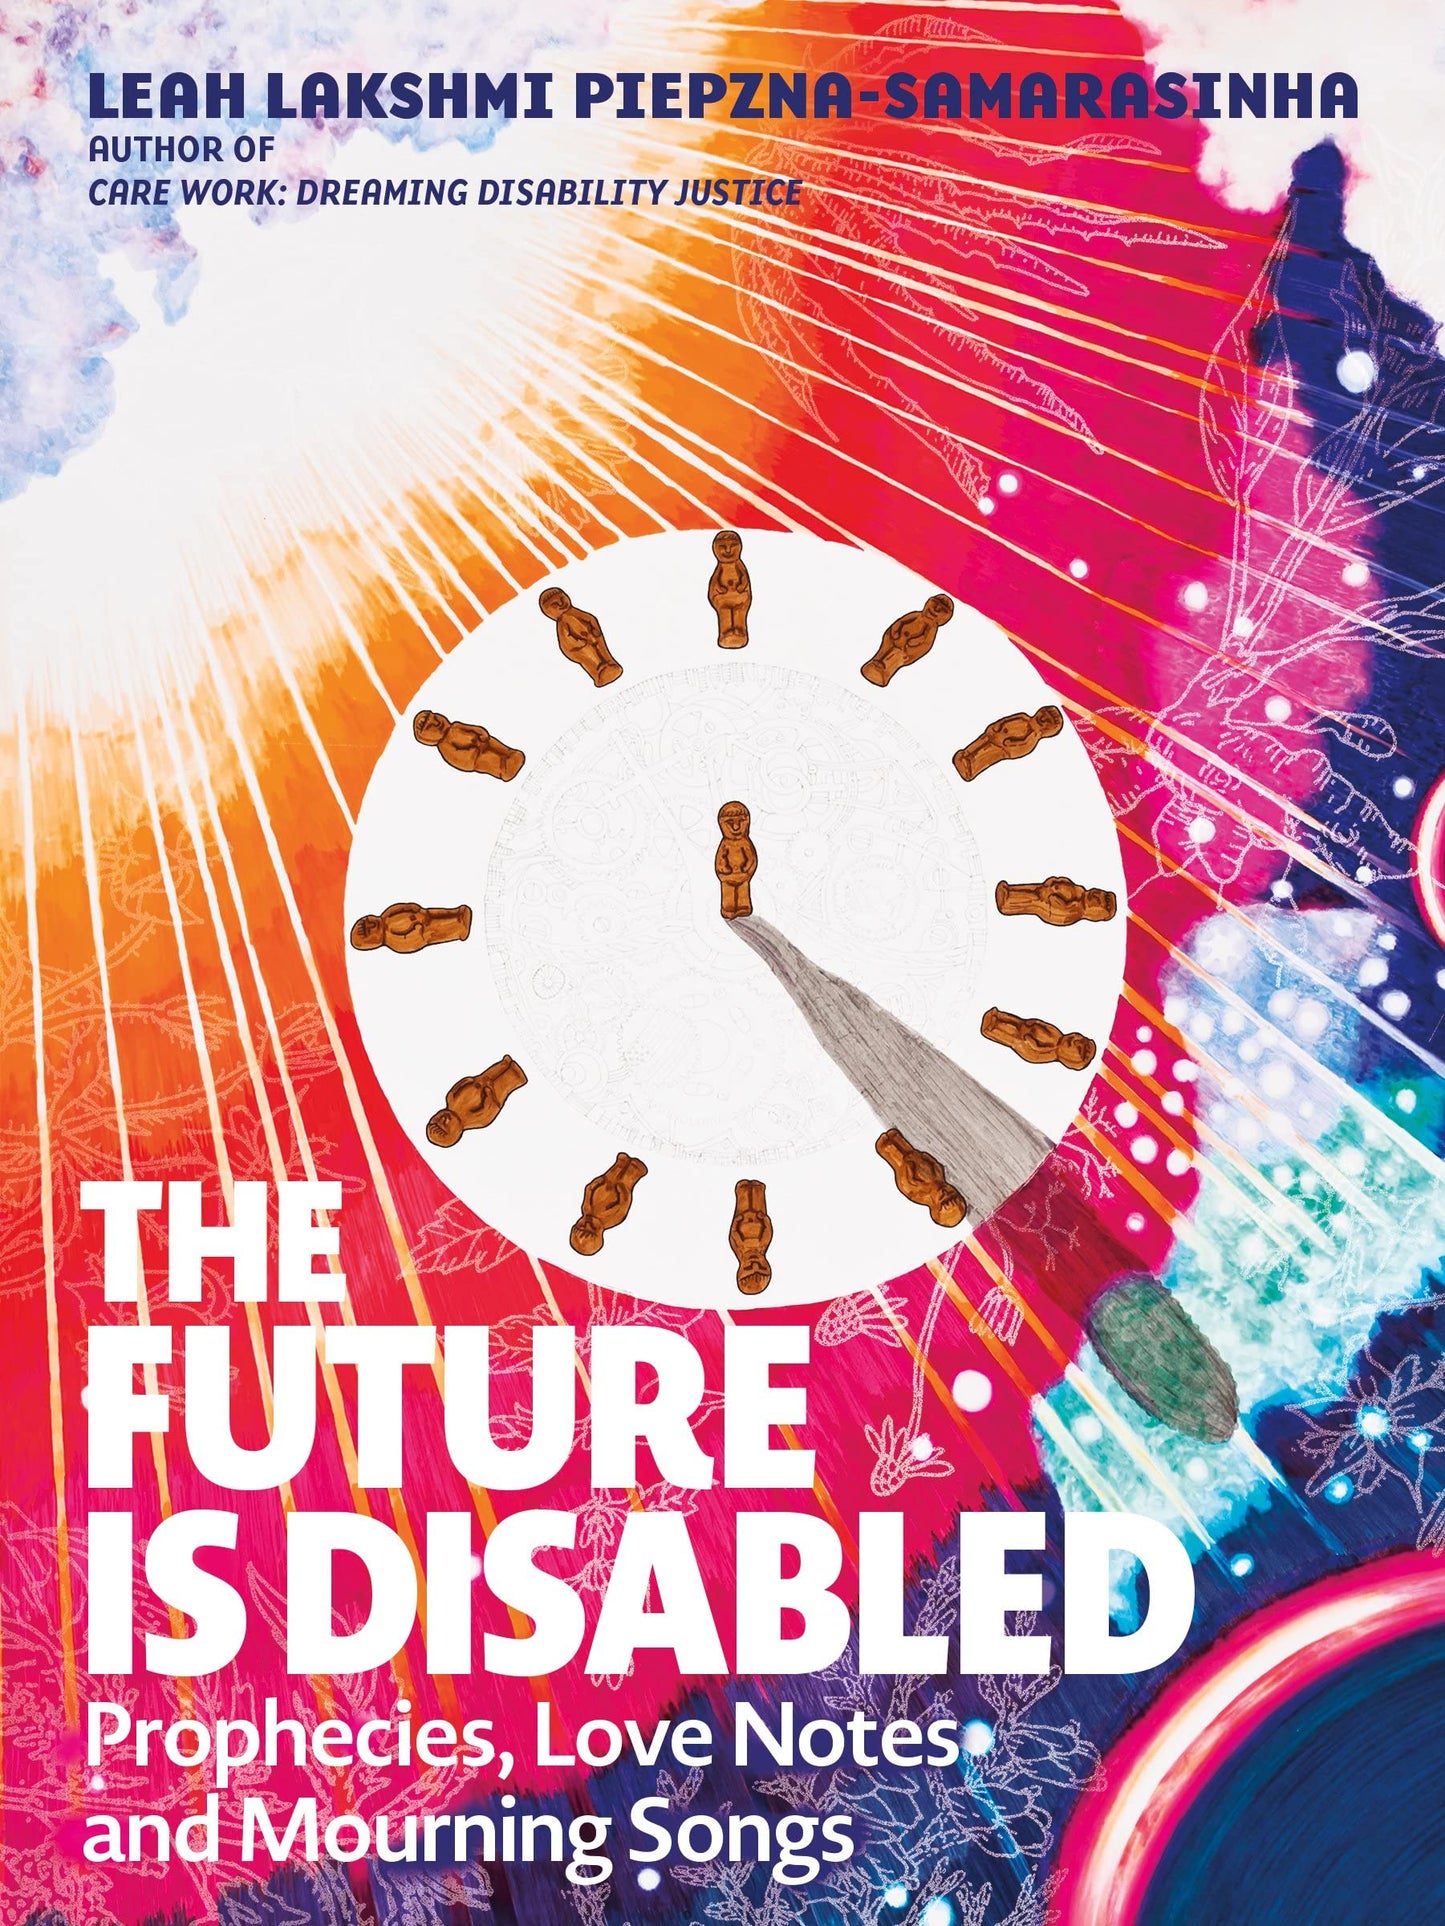 The Future is Disabled, by Leah Lakshmi Piepzna-Samarasinha